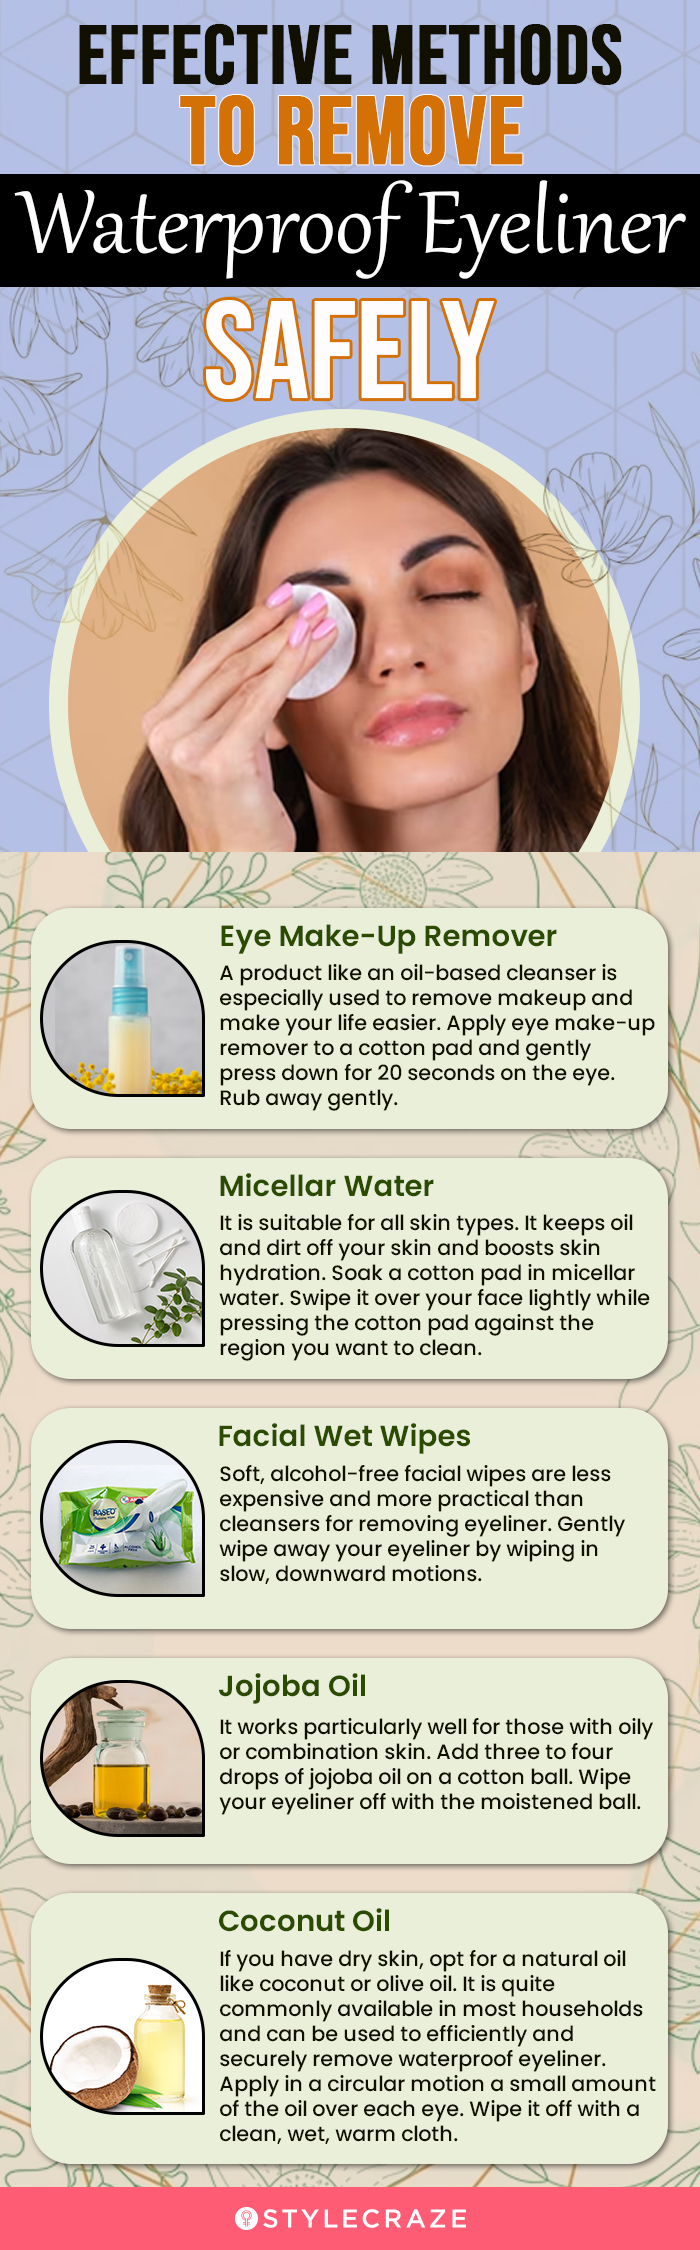 effective methods to remove waterproof eyeliner safely (infographic)